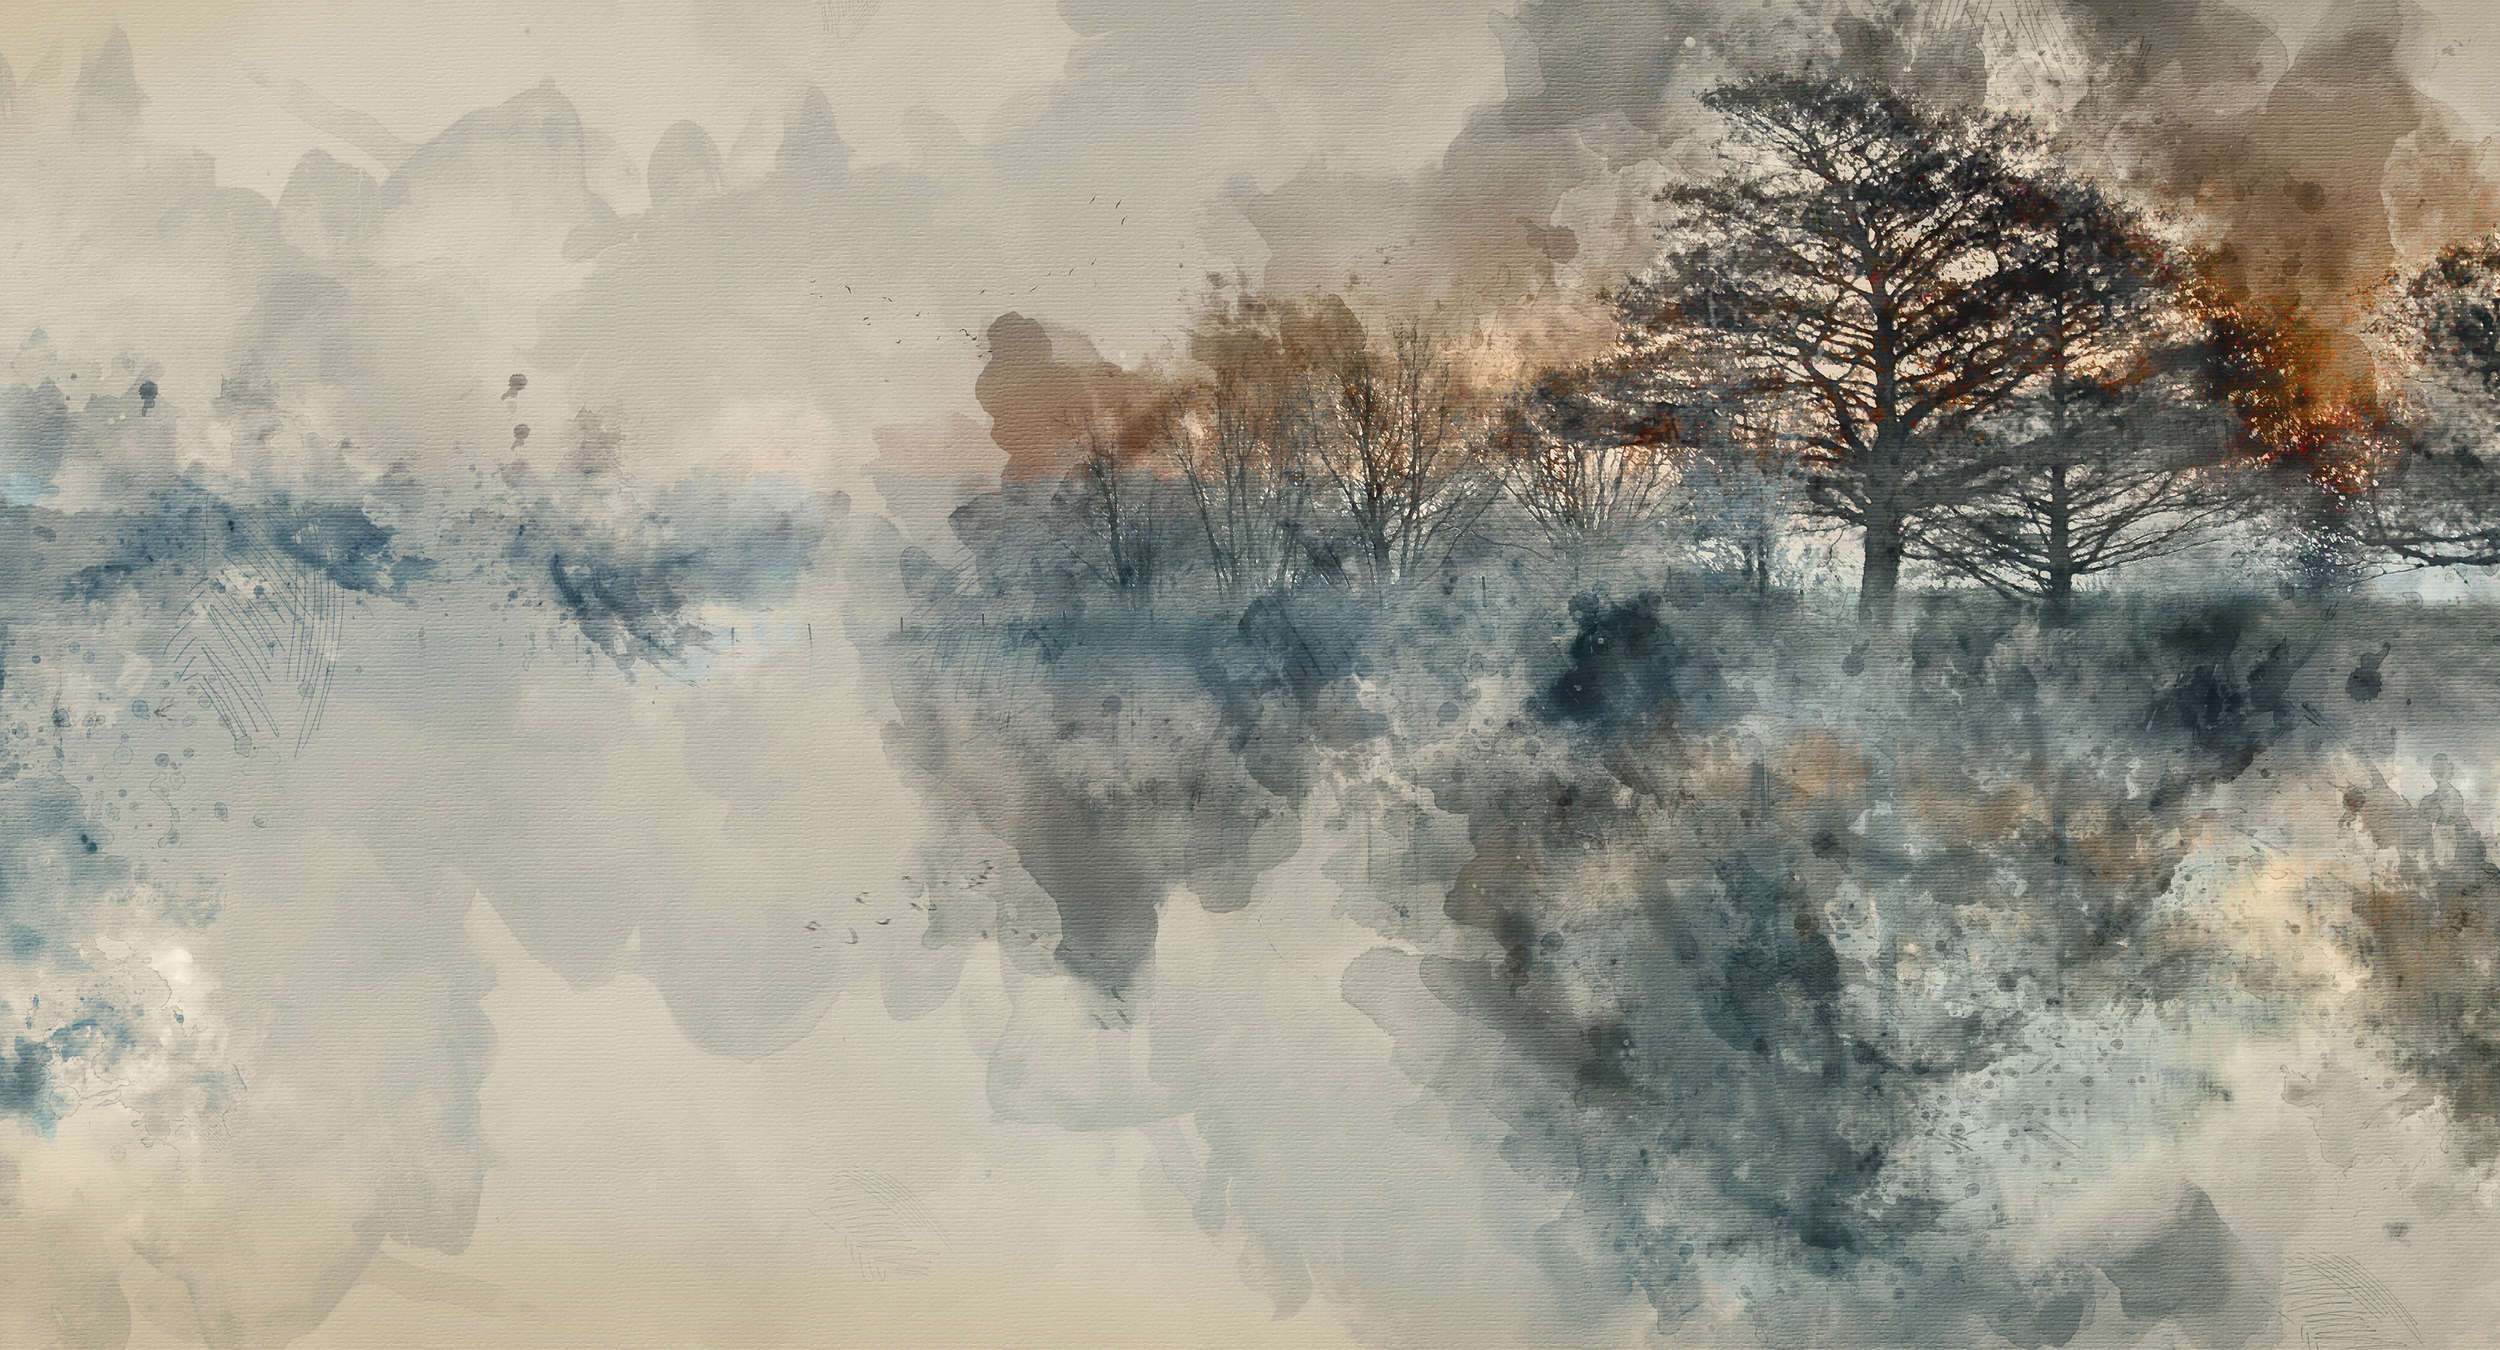             Fototapete Autumn Lake im Aquarellstil – Blau, Beige, Grau – Mattes Glattvlies
        